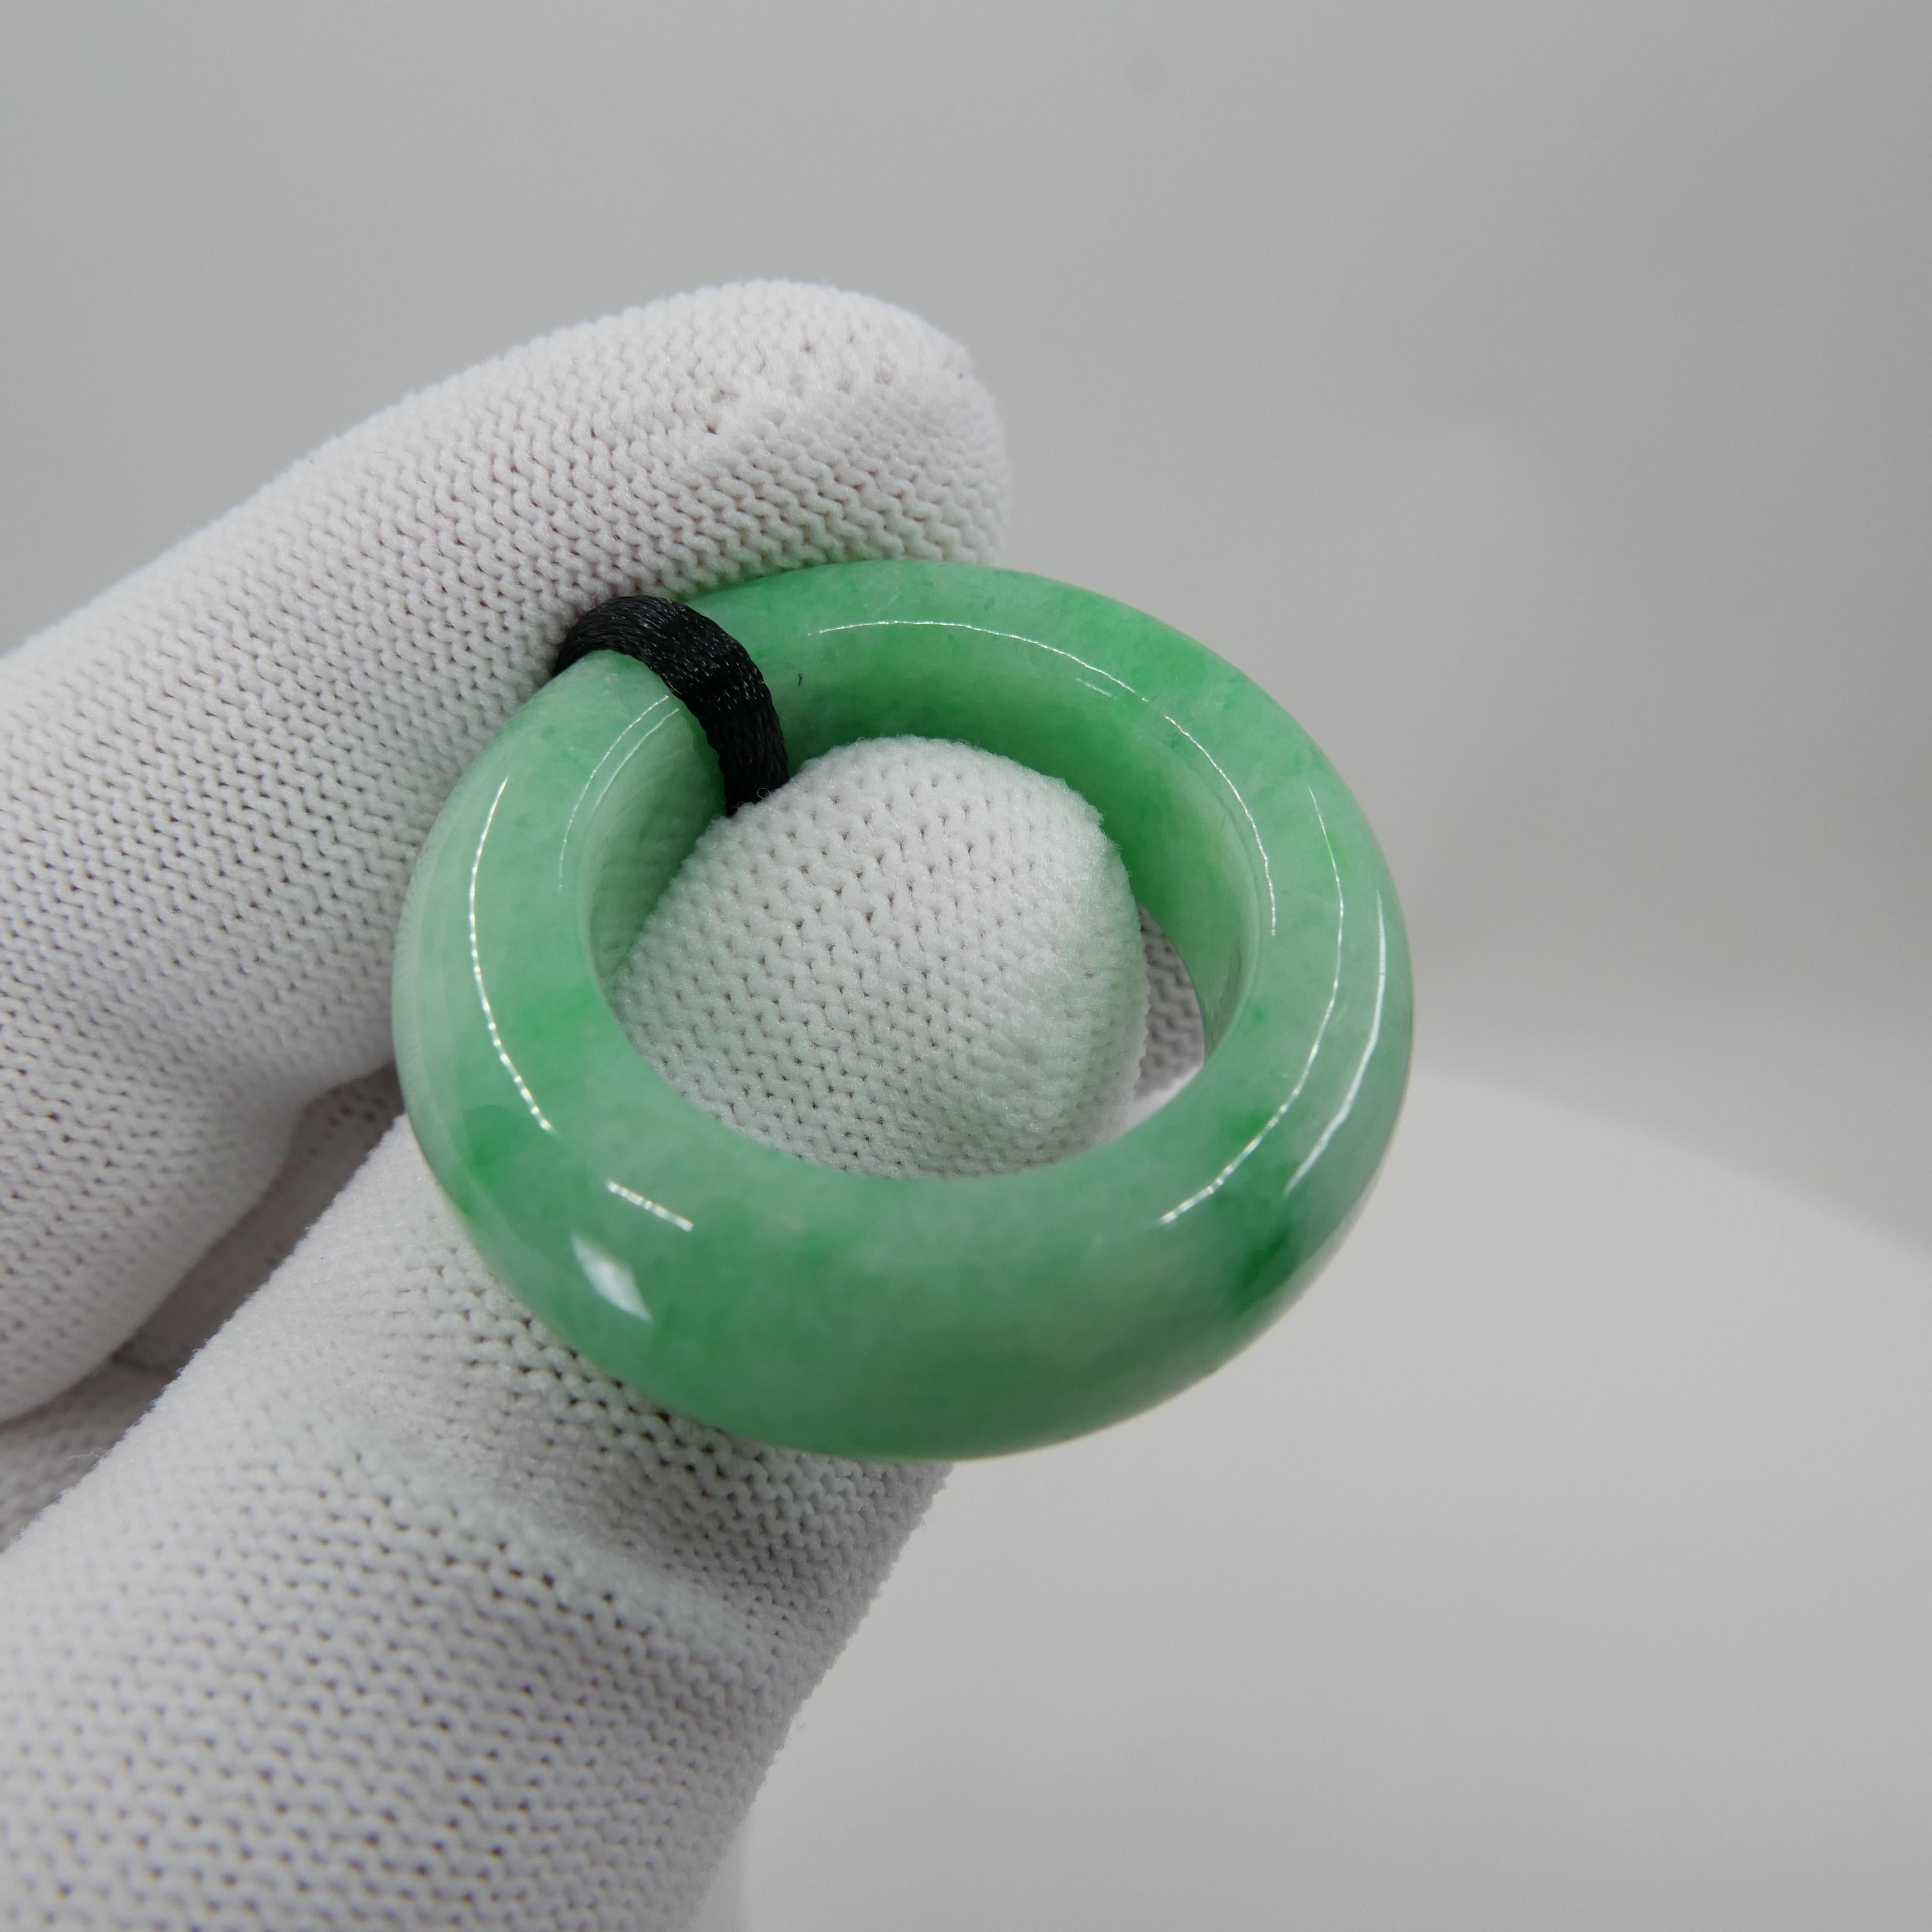 Certified 100 Carat Jadeite Jade Peace Pendant, Apple Green, Substantial For Sale 7